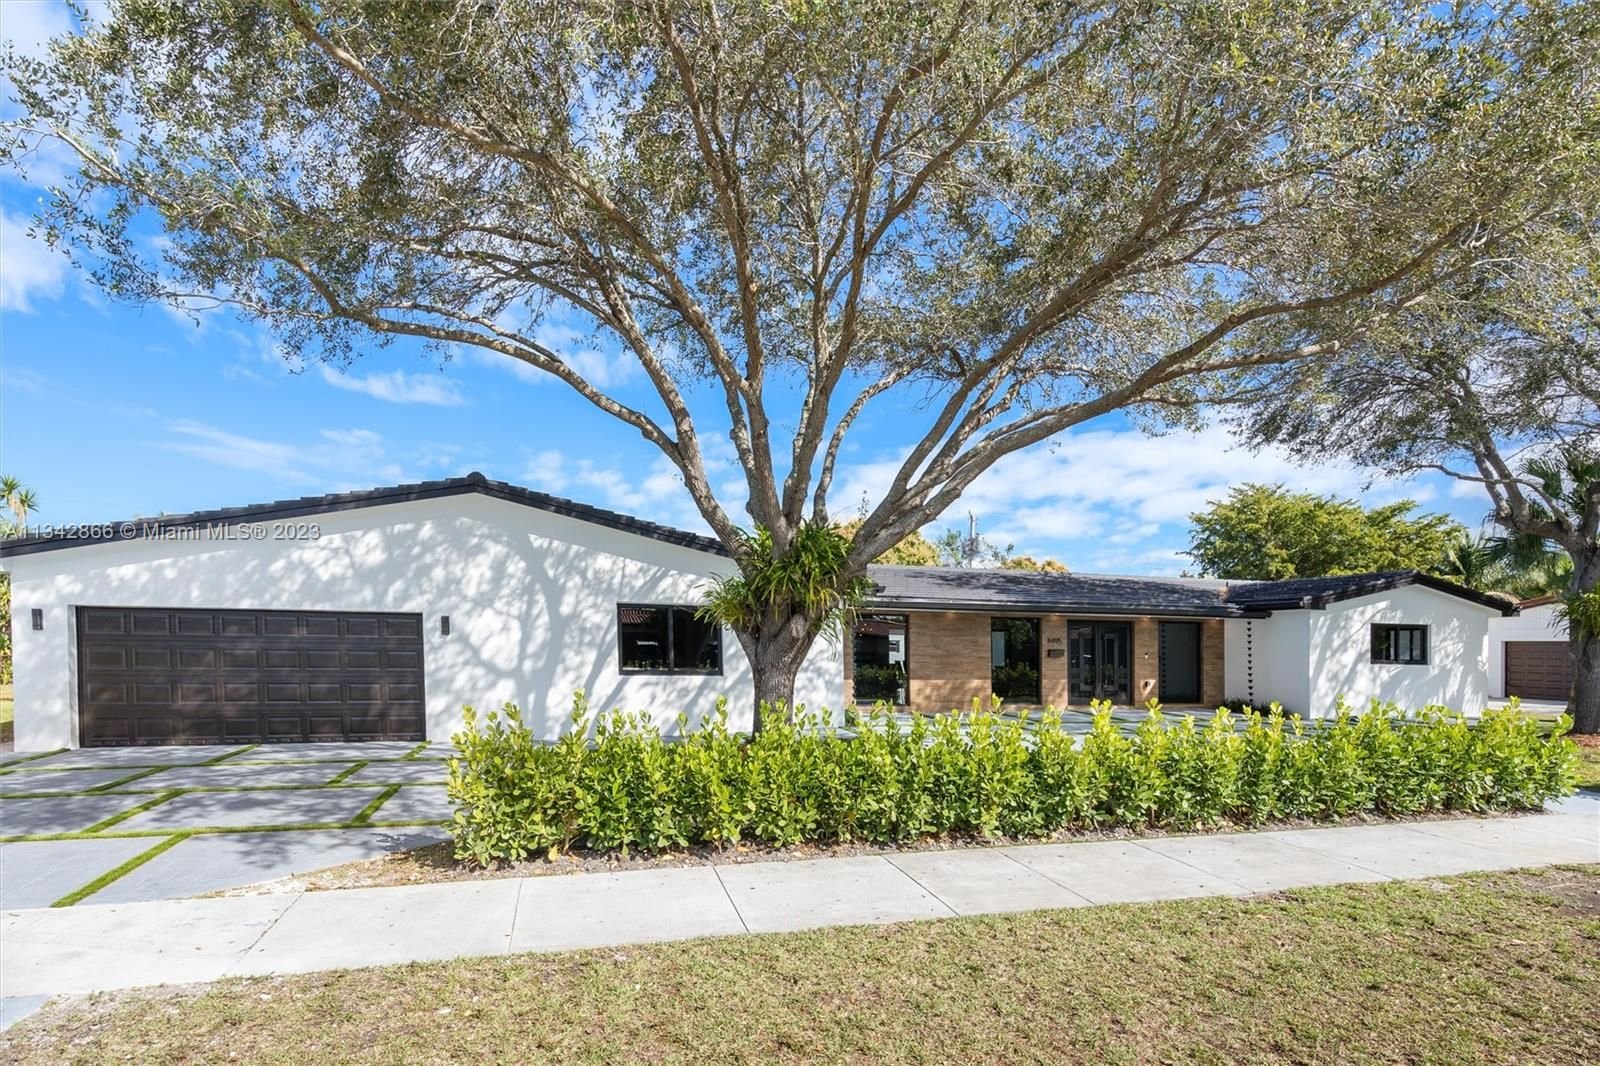 Real estate property located at 8495 104th St, Miami-Dade County, Miami, FL